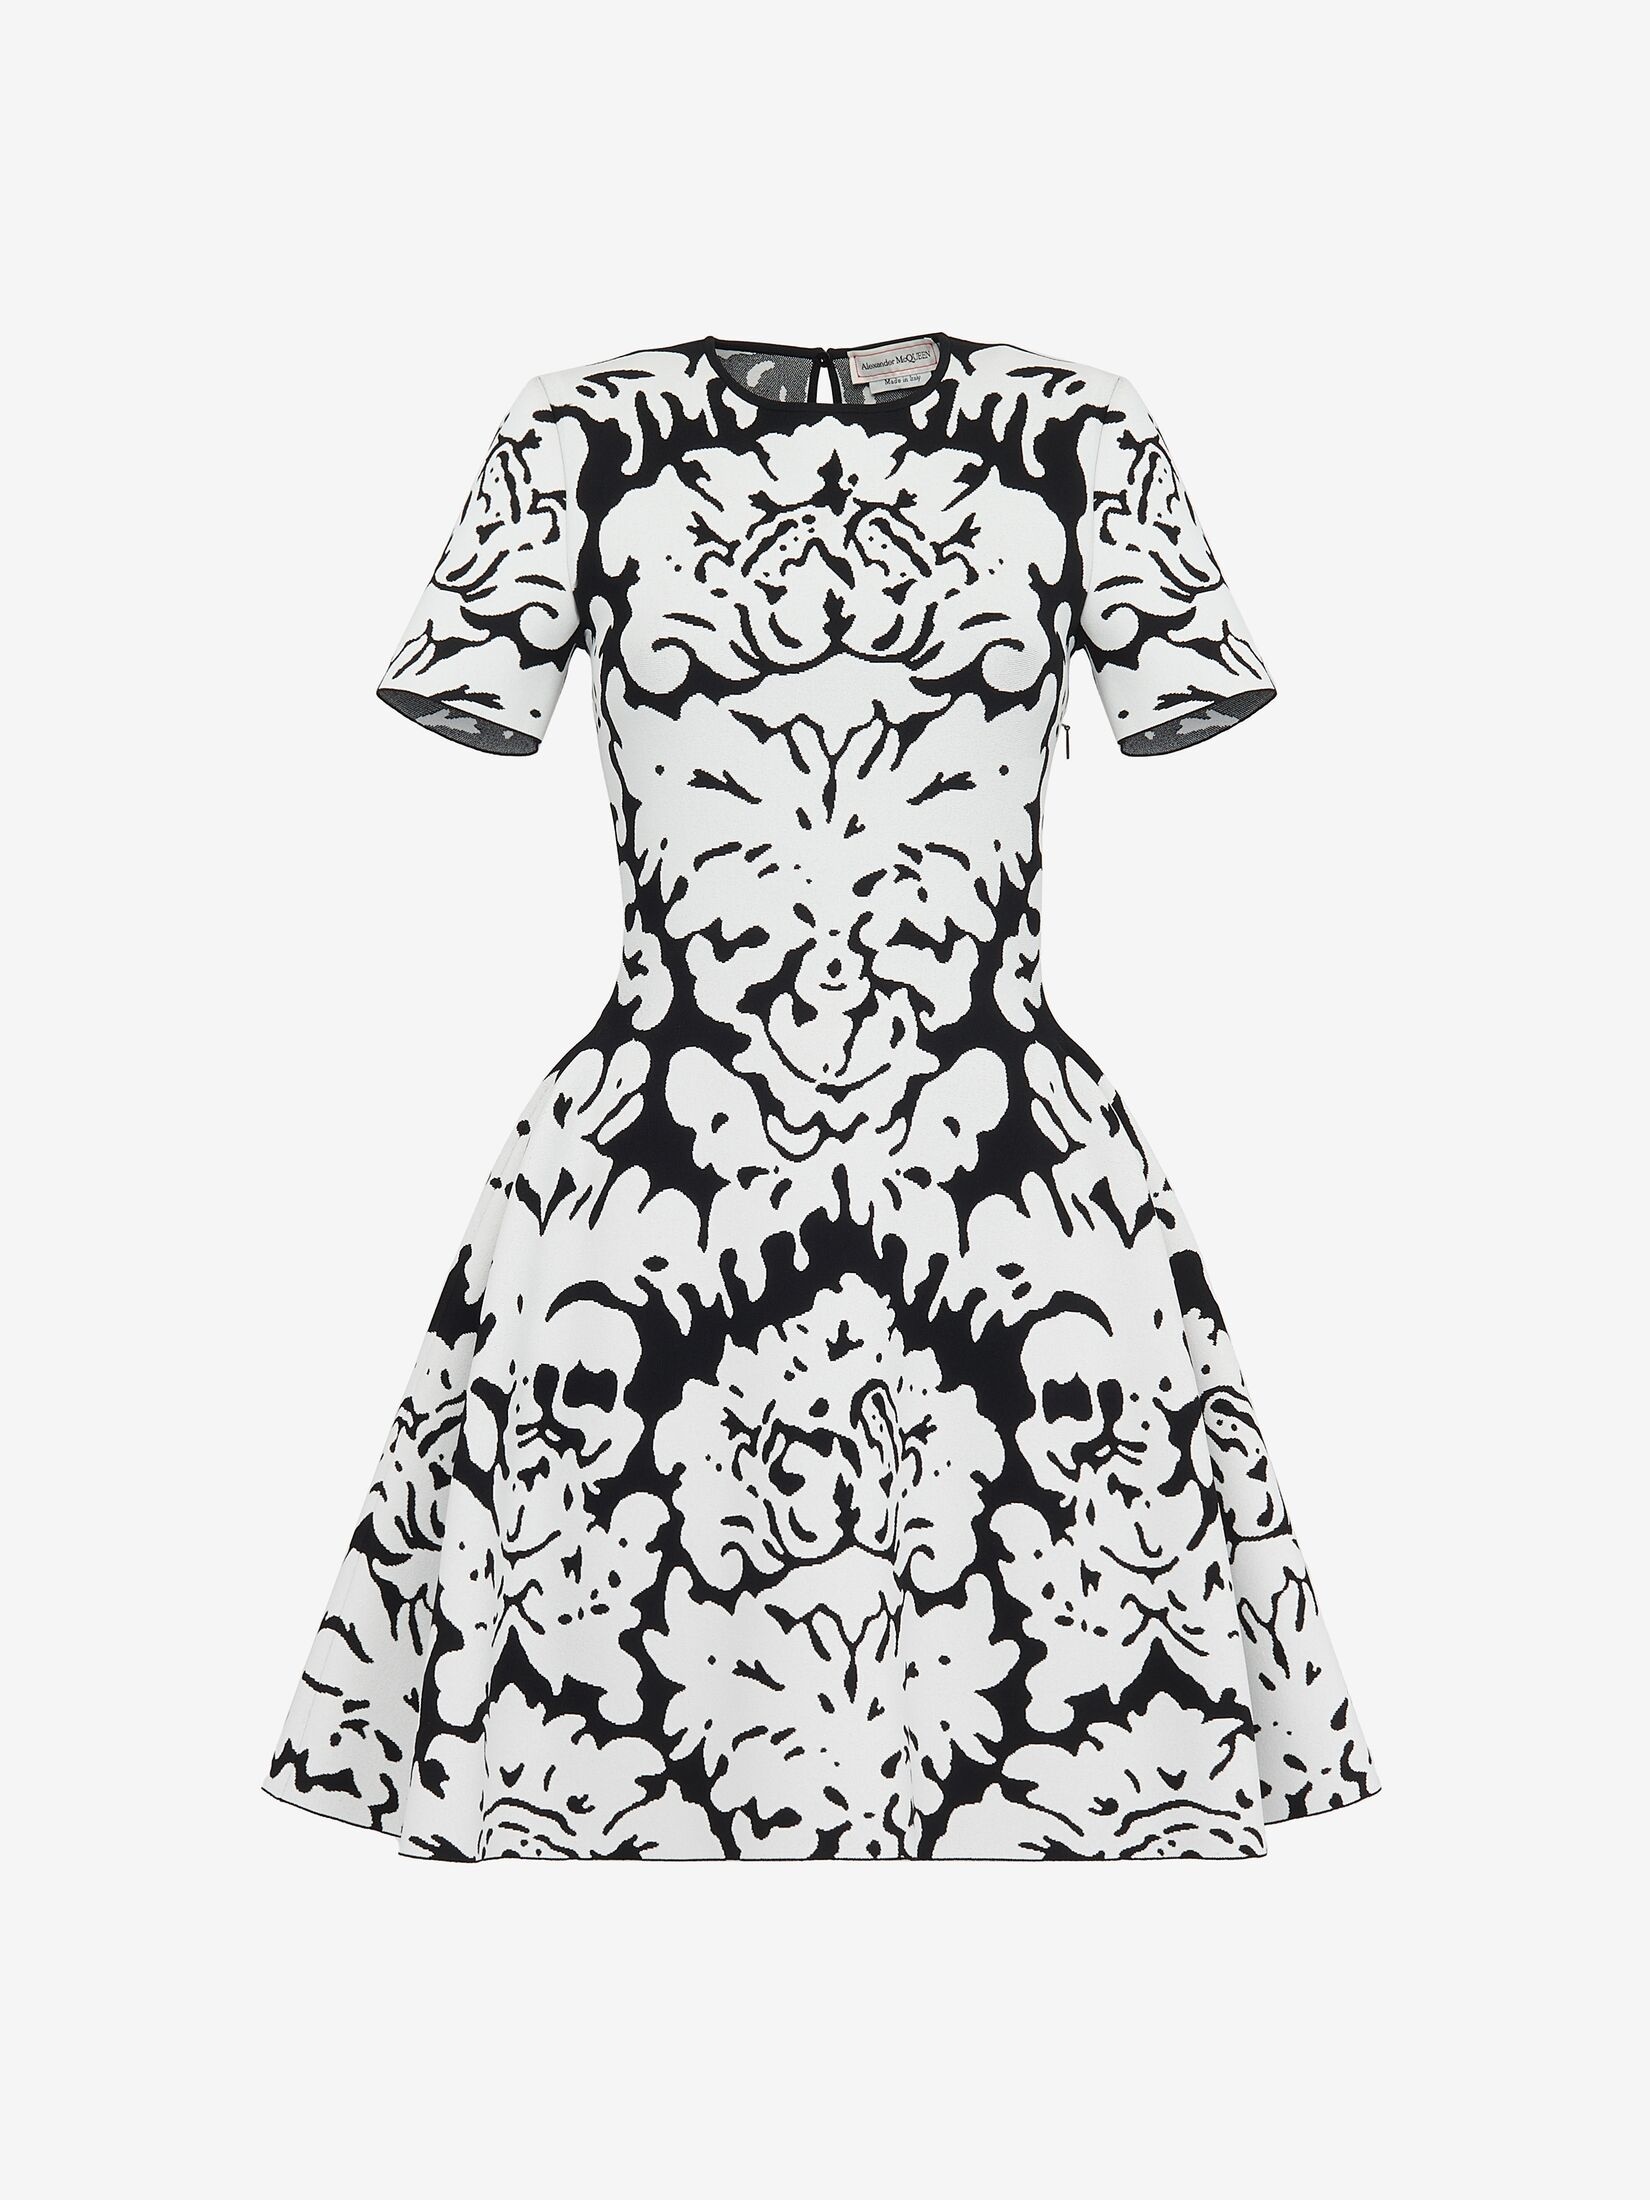 Women's Damask Jacquard Mini Dress in Black/white - 1